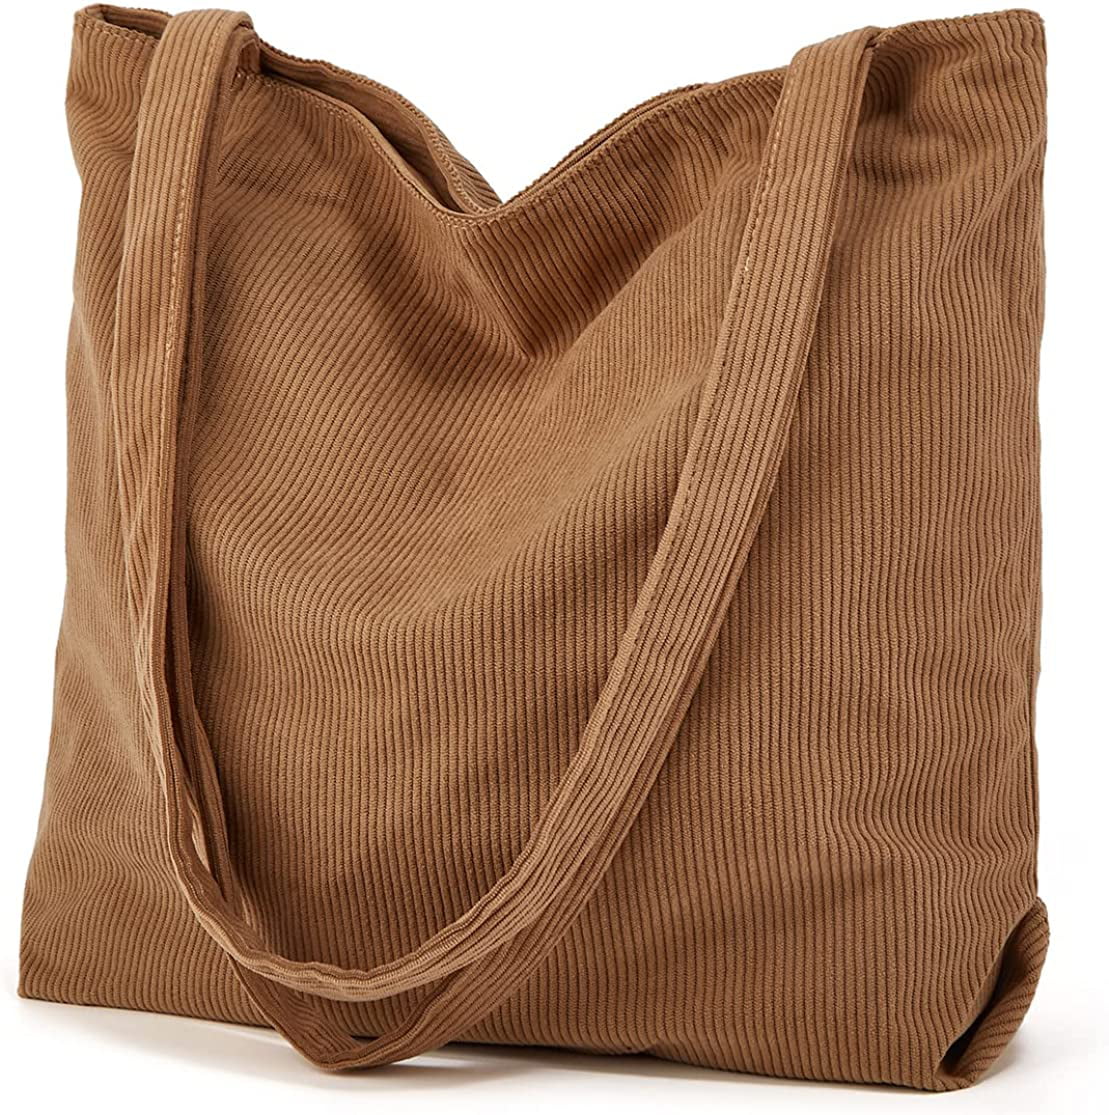 Cocopeaunt Women Tote Bag Canvas Shoulder Bag Chic Small Hobo Bag Crossbody Bag Purse Casual Satchel Handbag for Girls, Adult Unisex, Size: One size